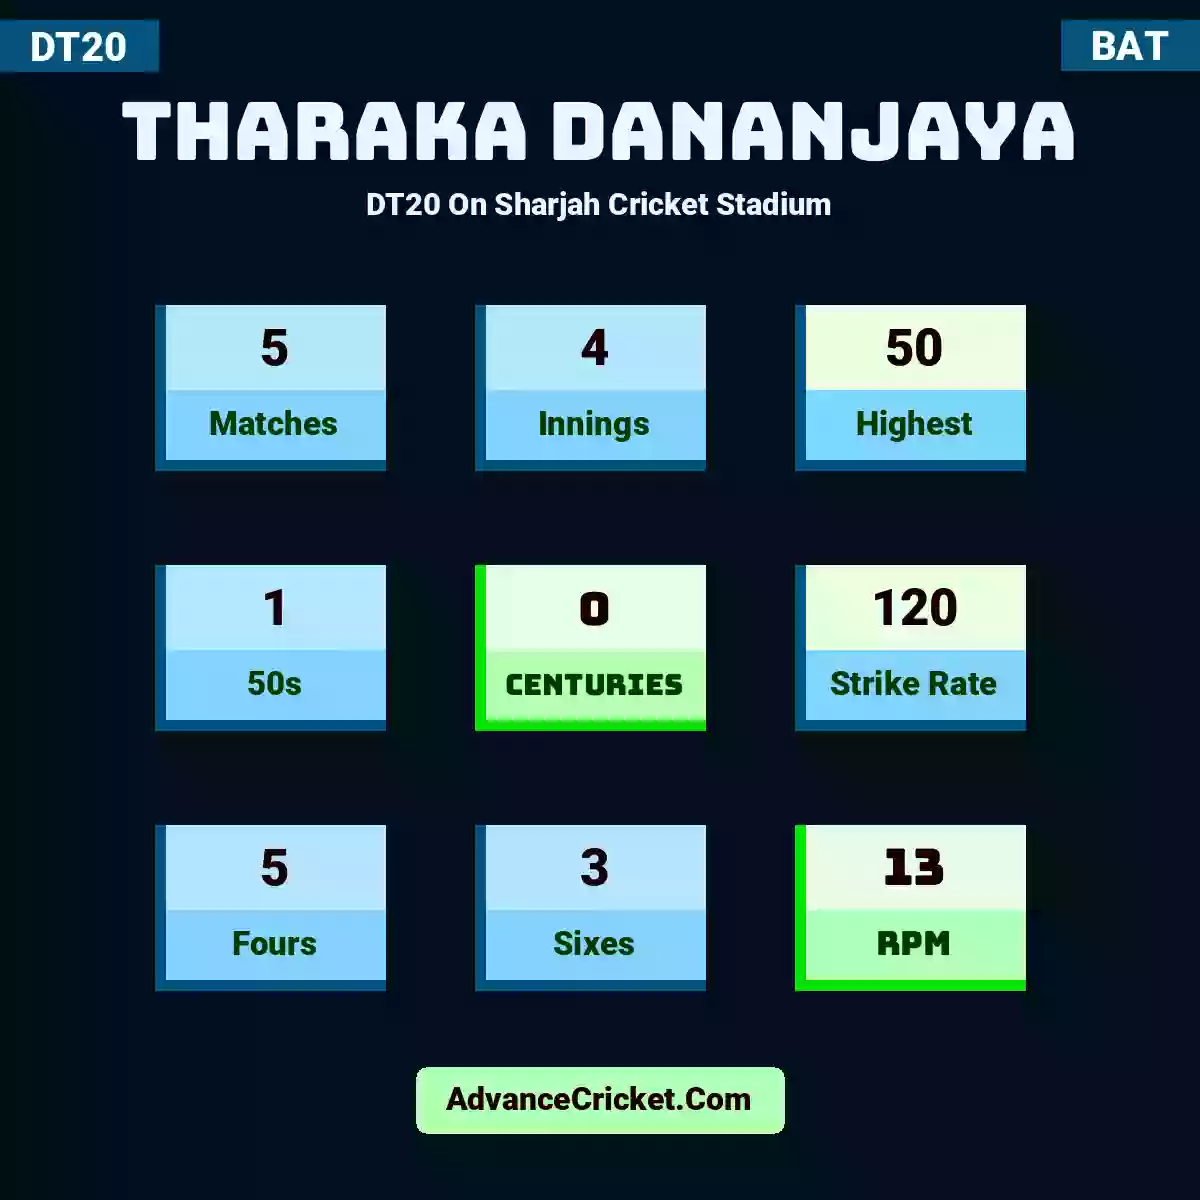 Tharaka Dananjaya DT20  On Sharjah Cricket Stadium, Tharaka Dananjaya played 5 matches, scored 50 runs as highest, 1 half-centuries, and 0 centuries, with a strike rate of 120. T.Dananjaya hit 5 fours and 3 sixes, with an RPM of 13.